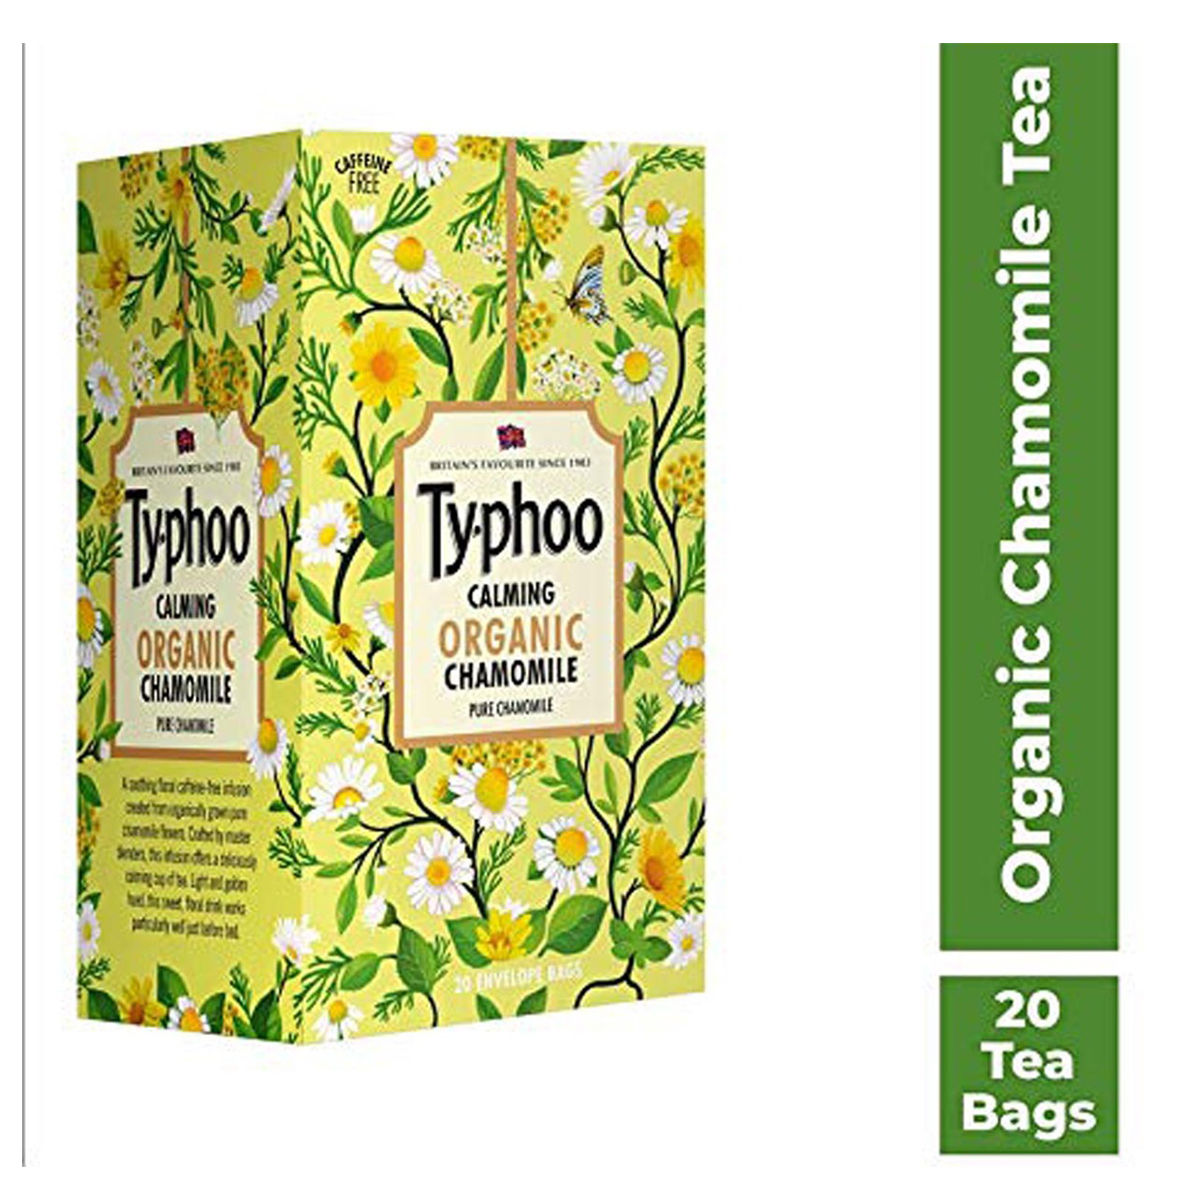 Buy Ty.Phoo Calming Organic Chamomile Tea Bags, 20 Count Online